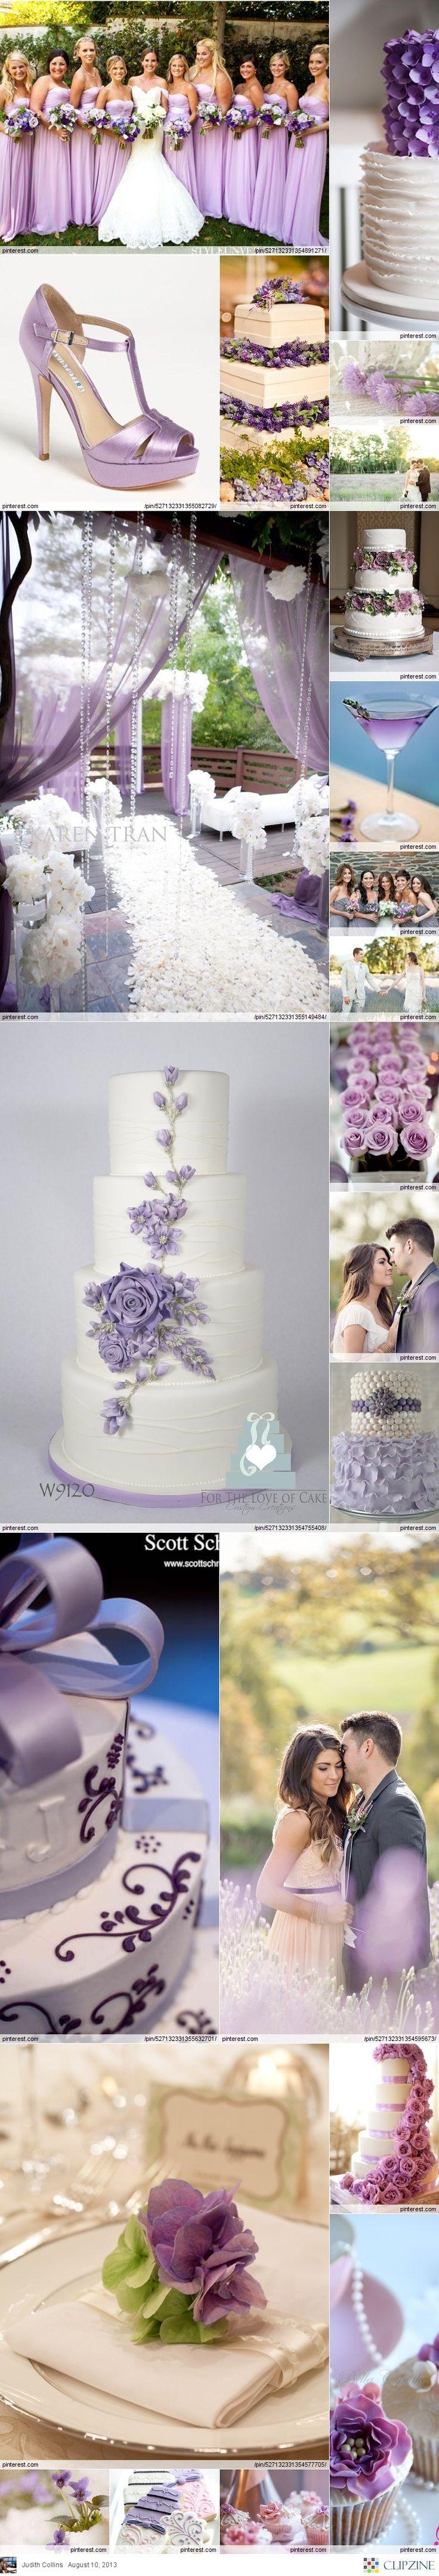 زفاف - Lavender Weddings